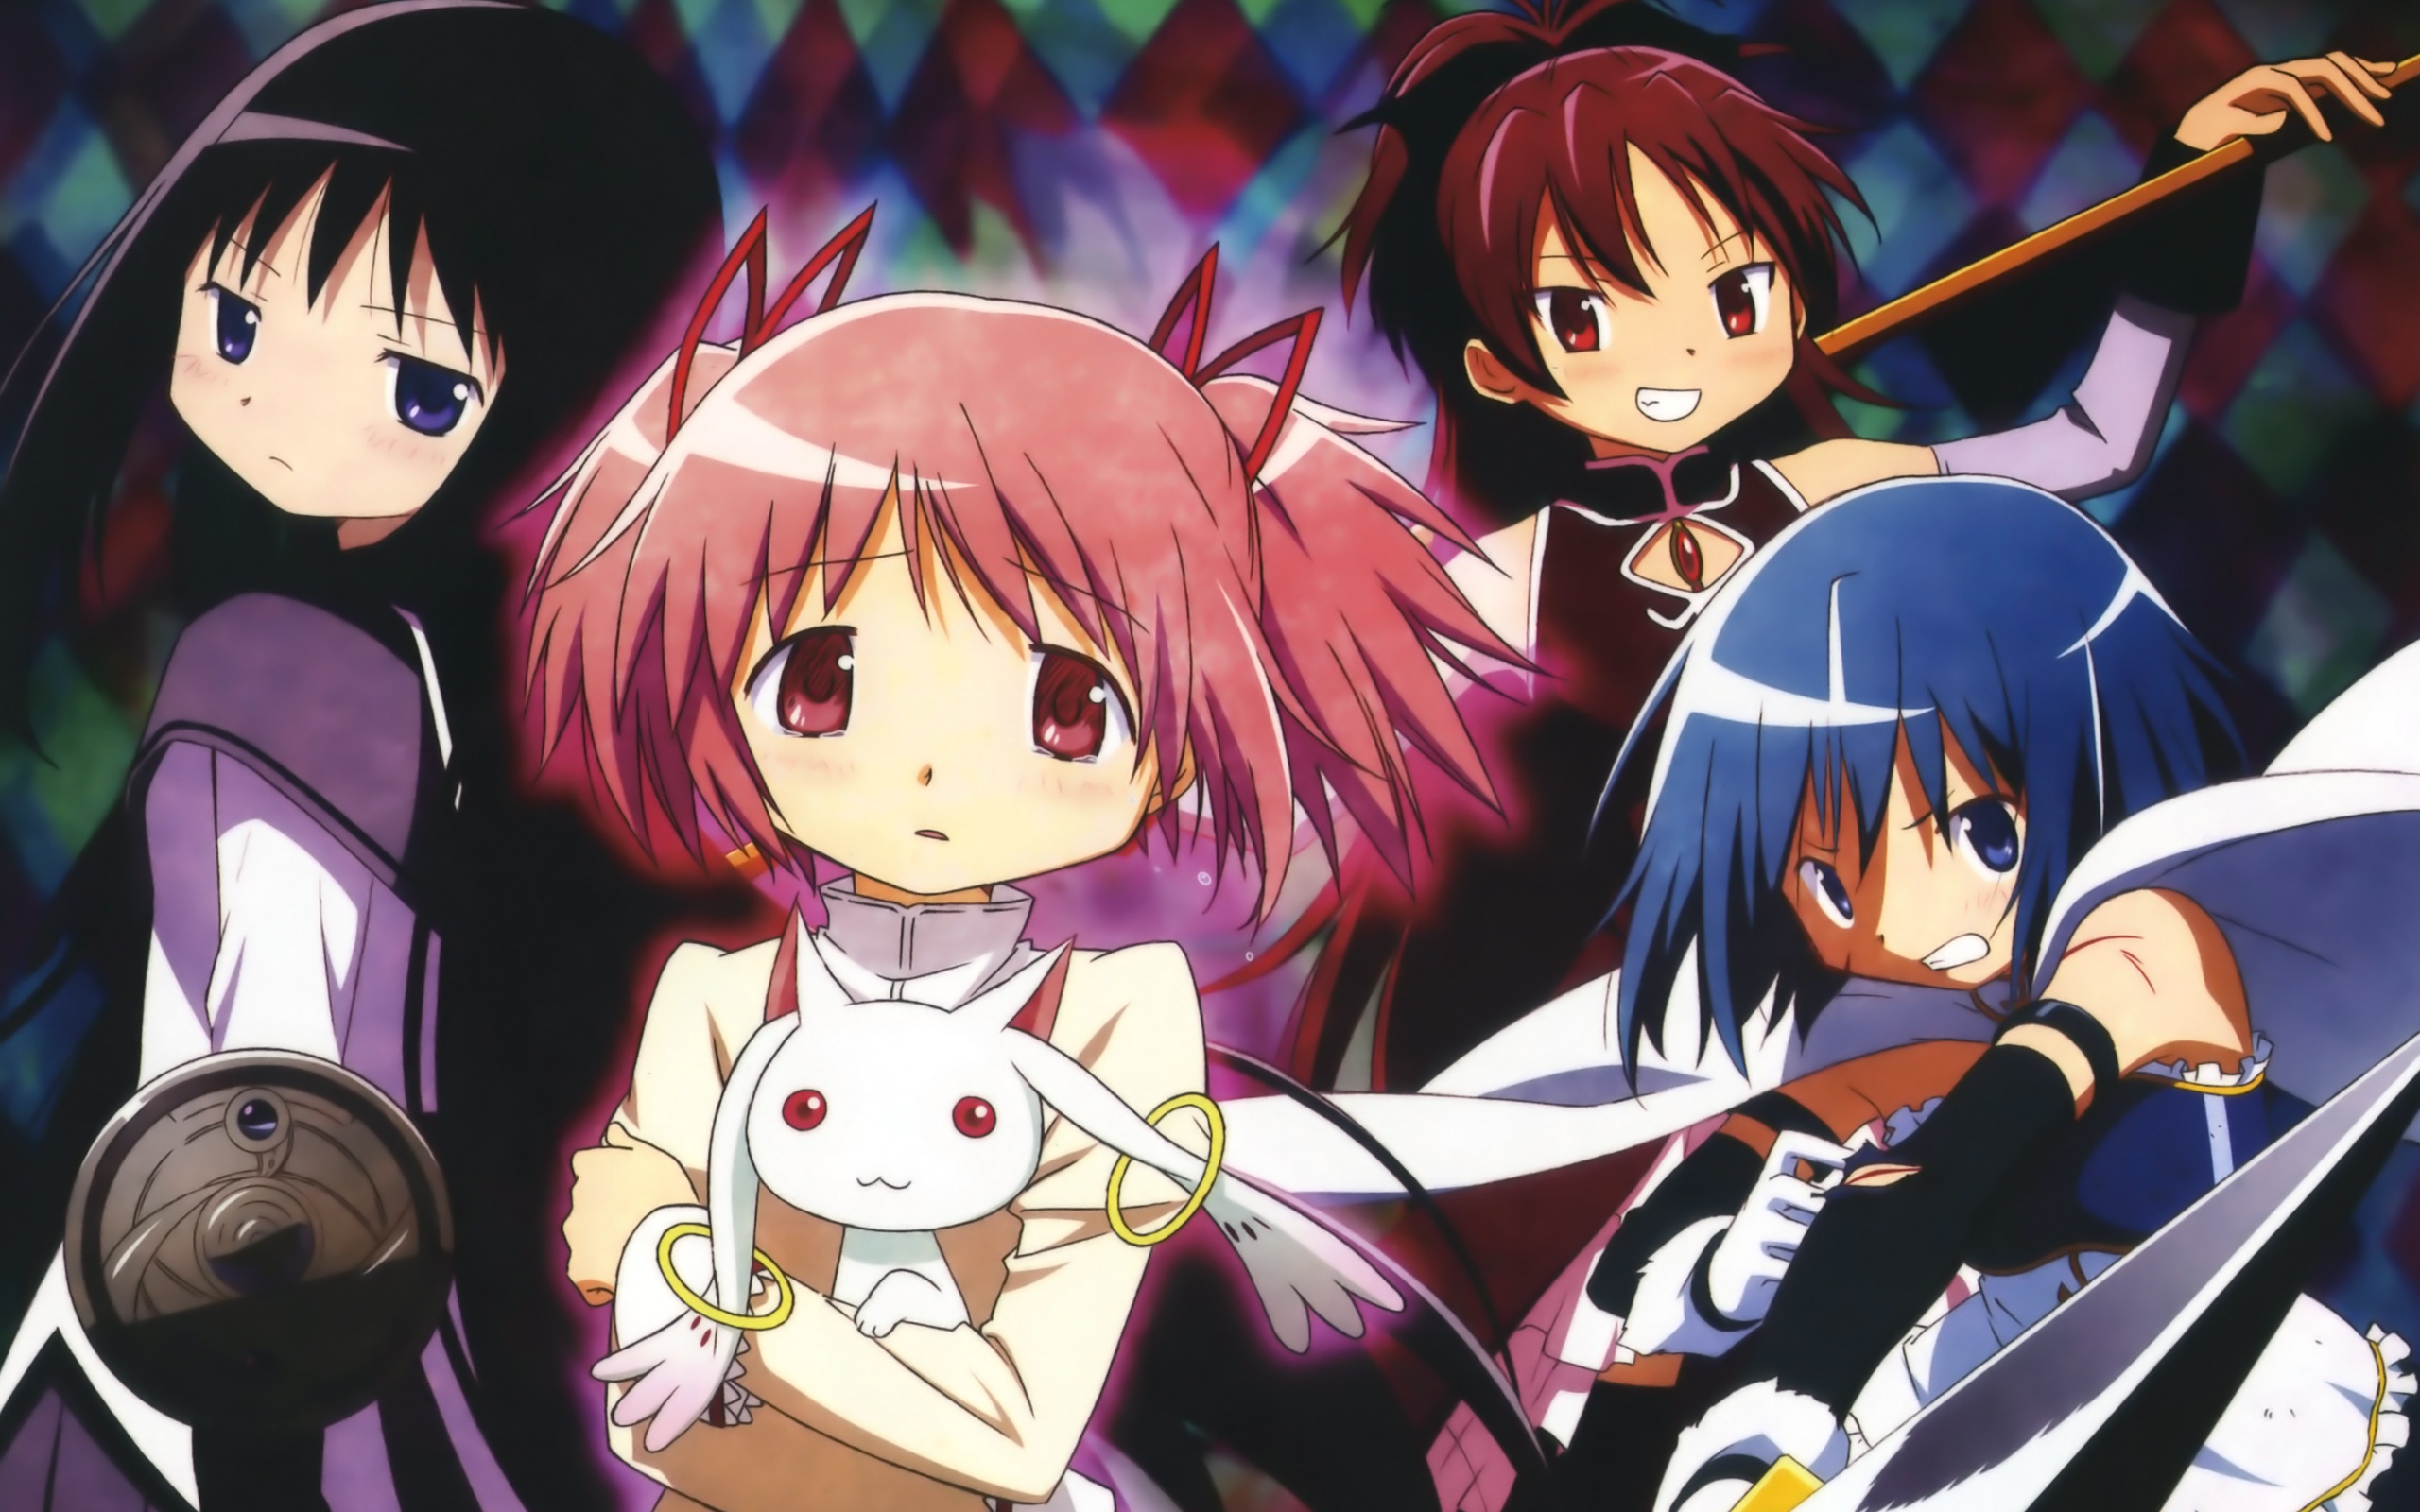 Téléchargez gratuitement l'image Animé, Kyōko Sakura, Puella Magi Madoka Magica, Homura Akemi, Madoka Kaname, Sayaka Miki, Kyuubey (Puella Magi Madoka Magica) sur le bureau de votre PC